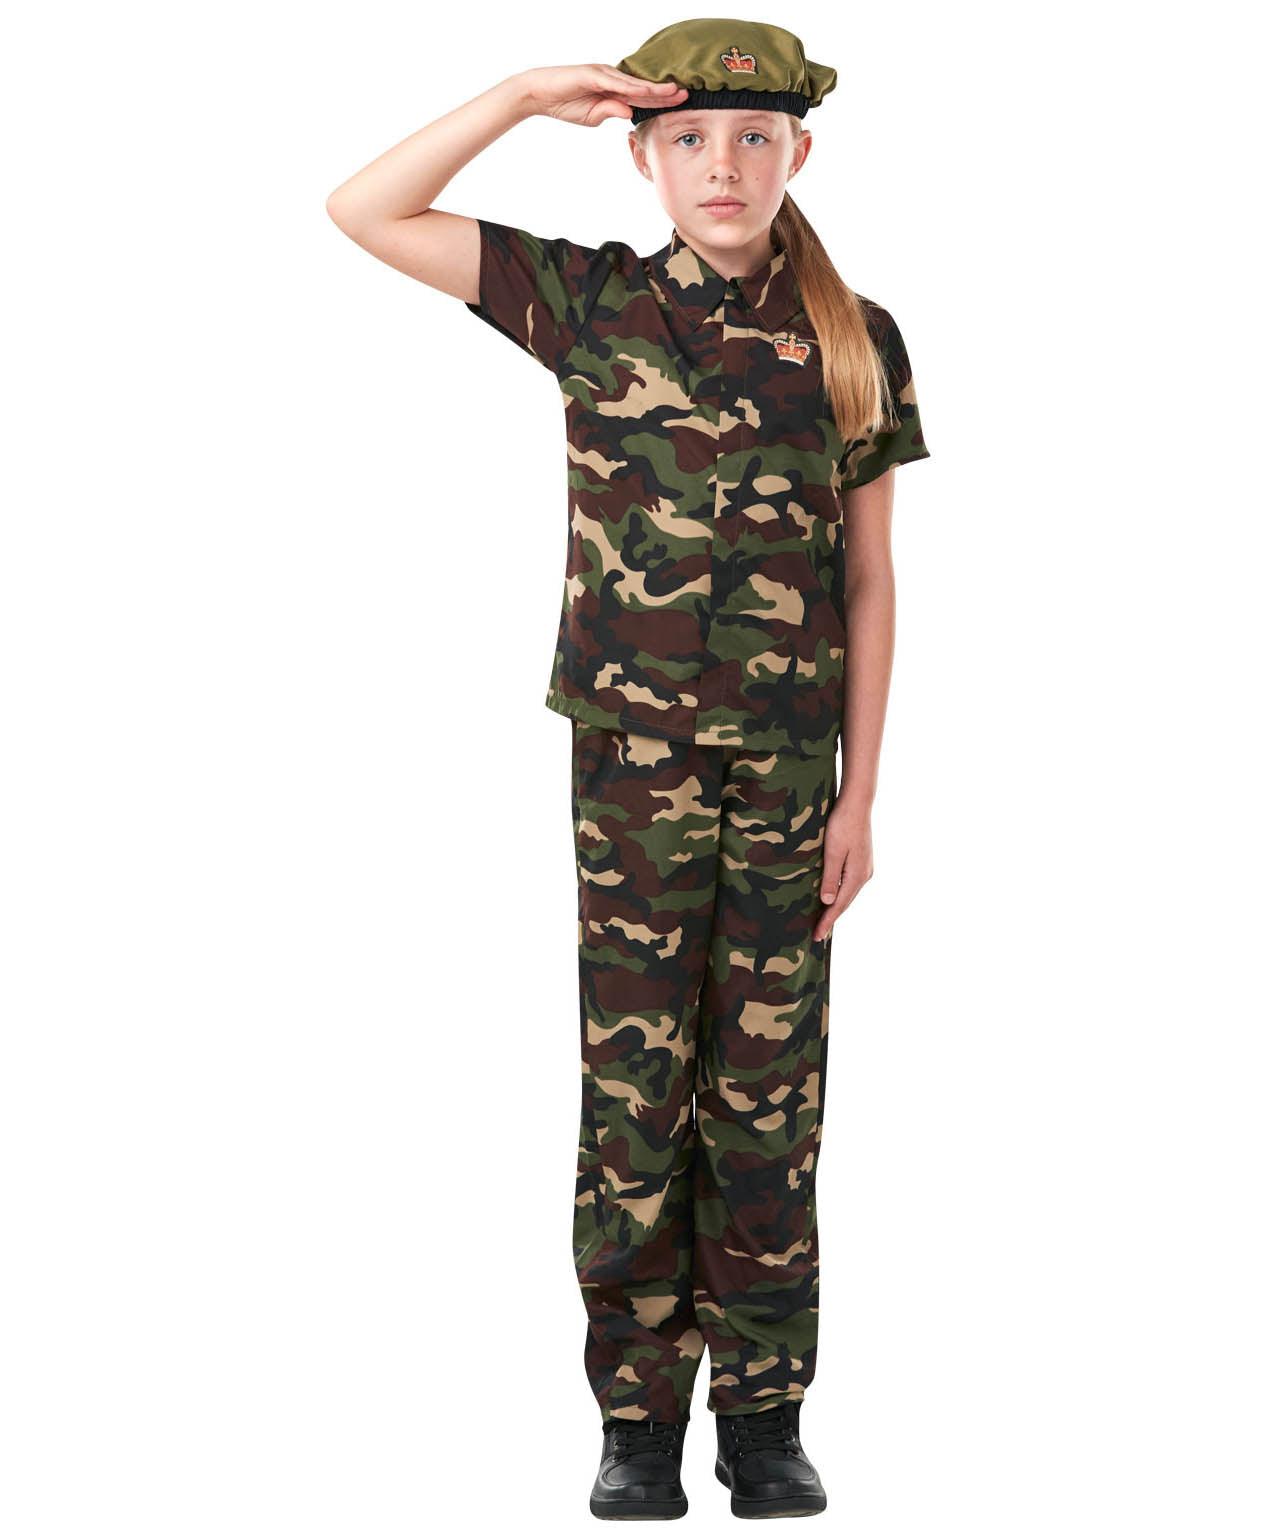 Child Soldier Costume